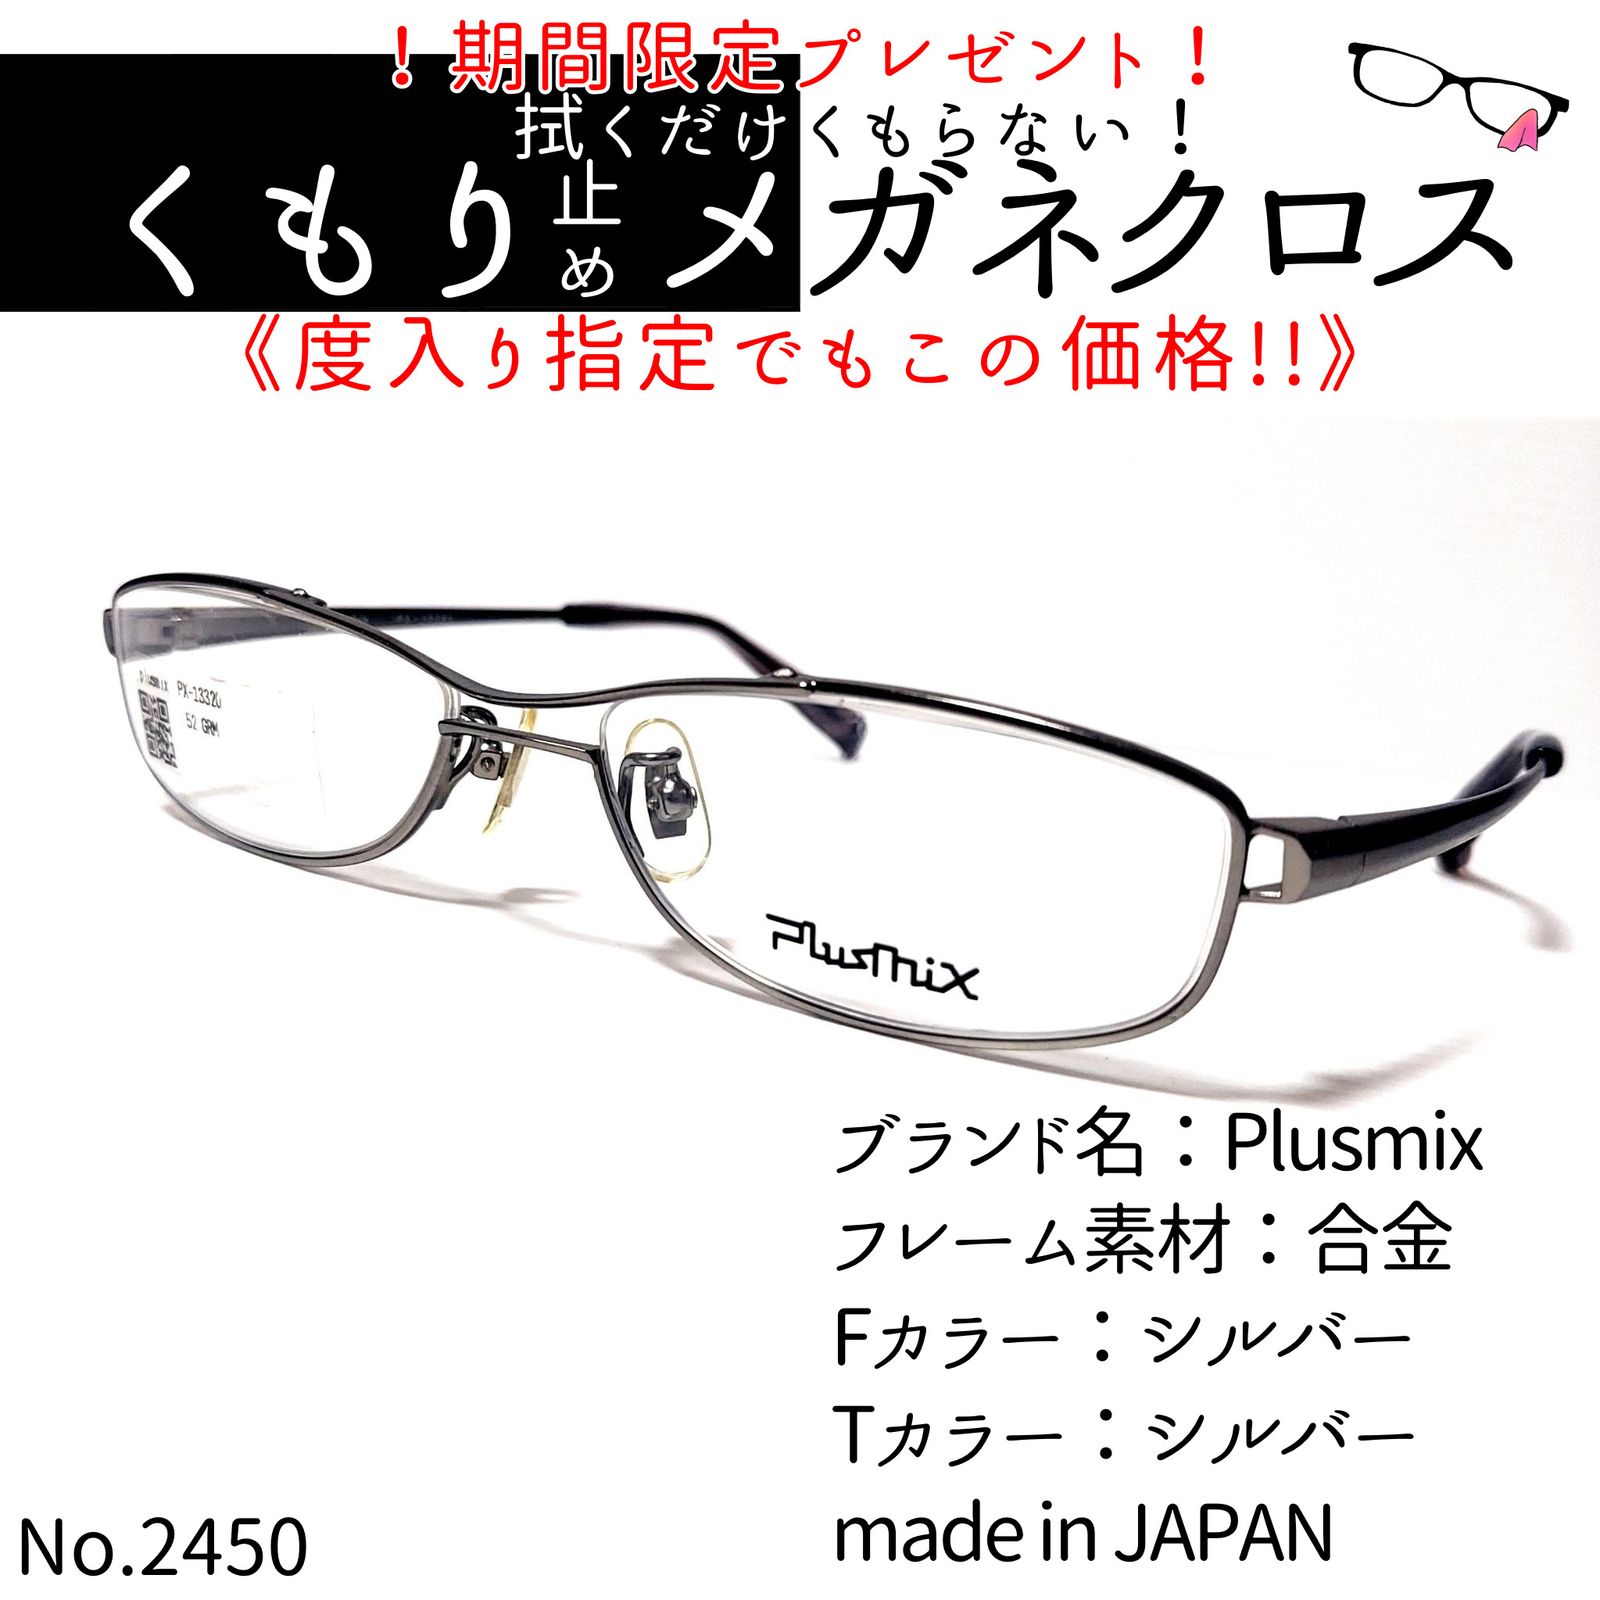 No.2450メガネ Plusmix【度数入り込み価格】-